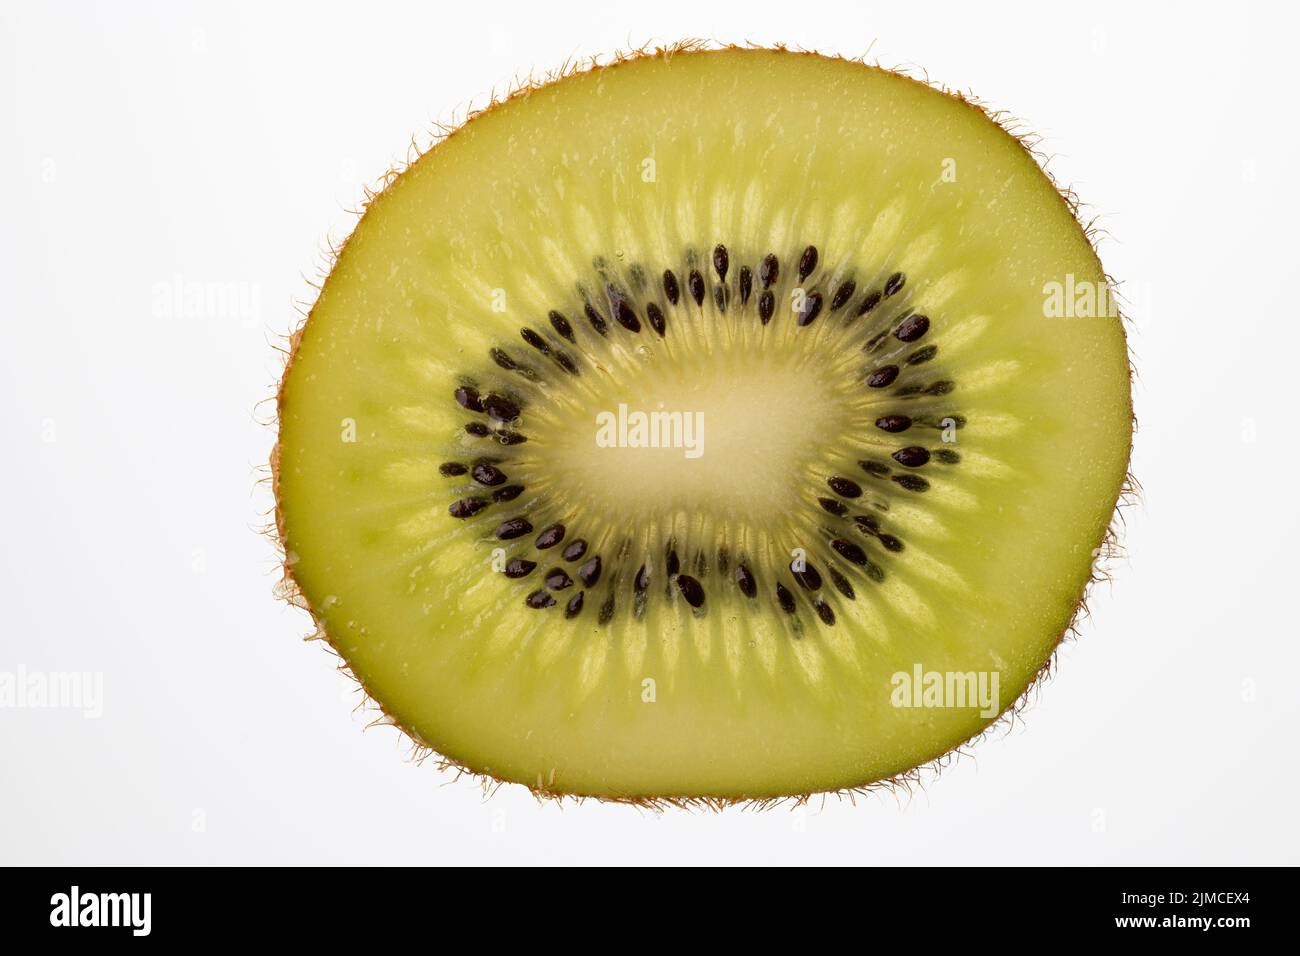 Slice of Kiwi fruit cut in backlight foto shot Stock Photo